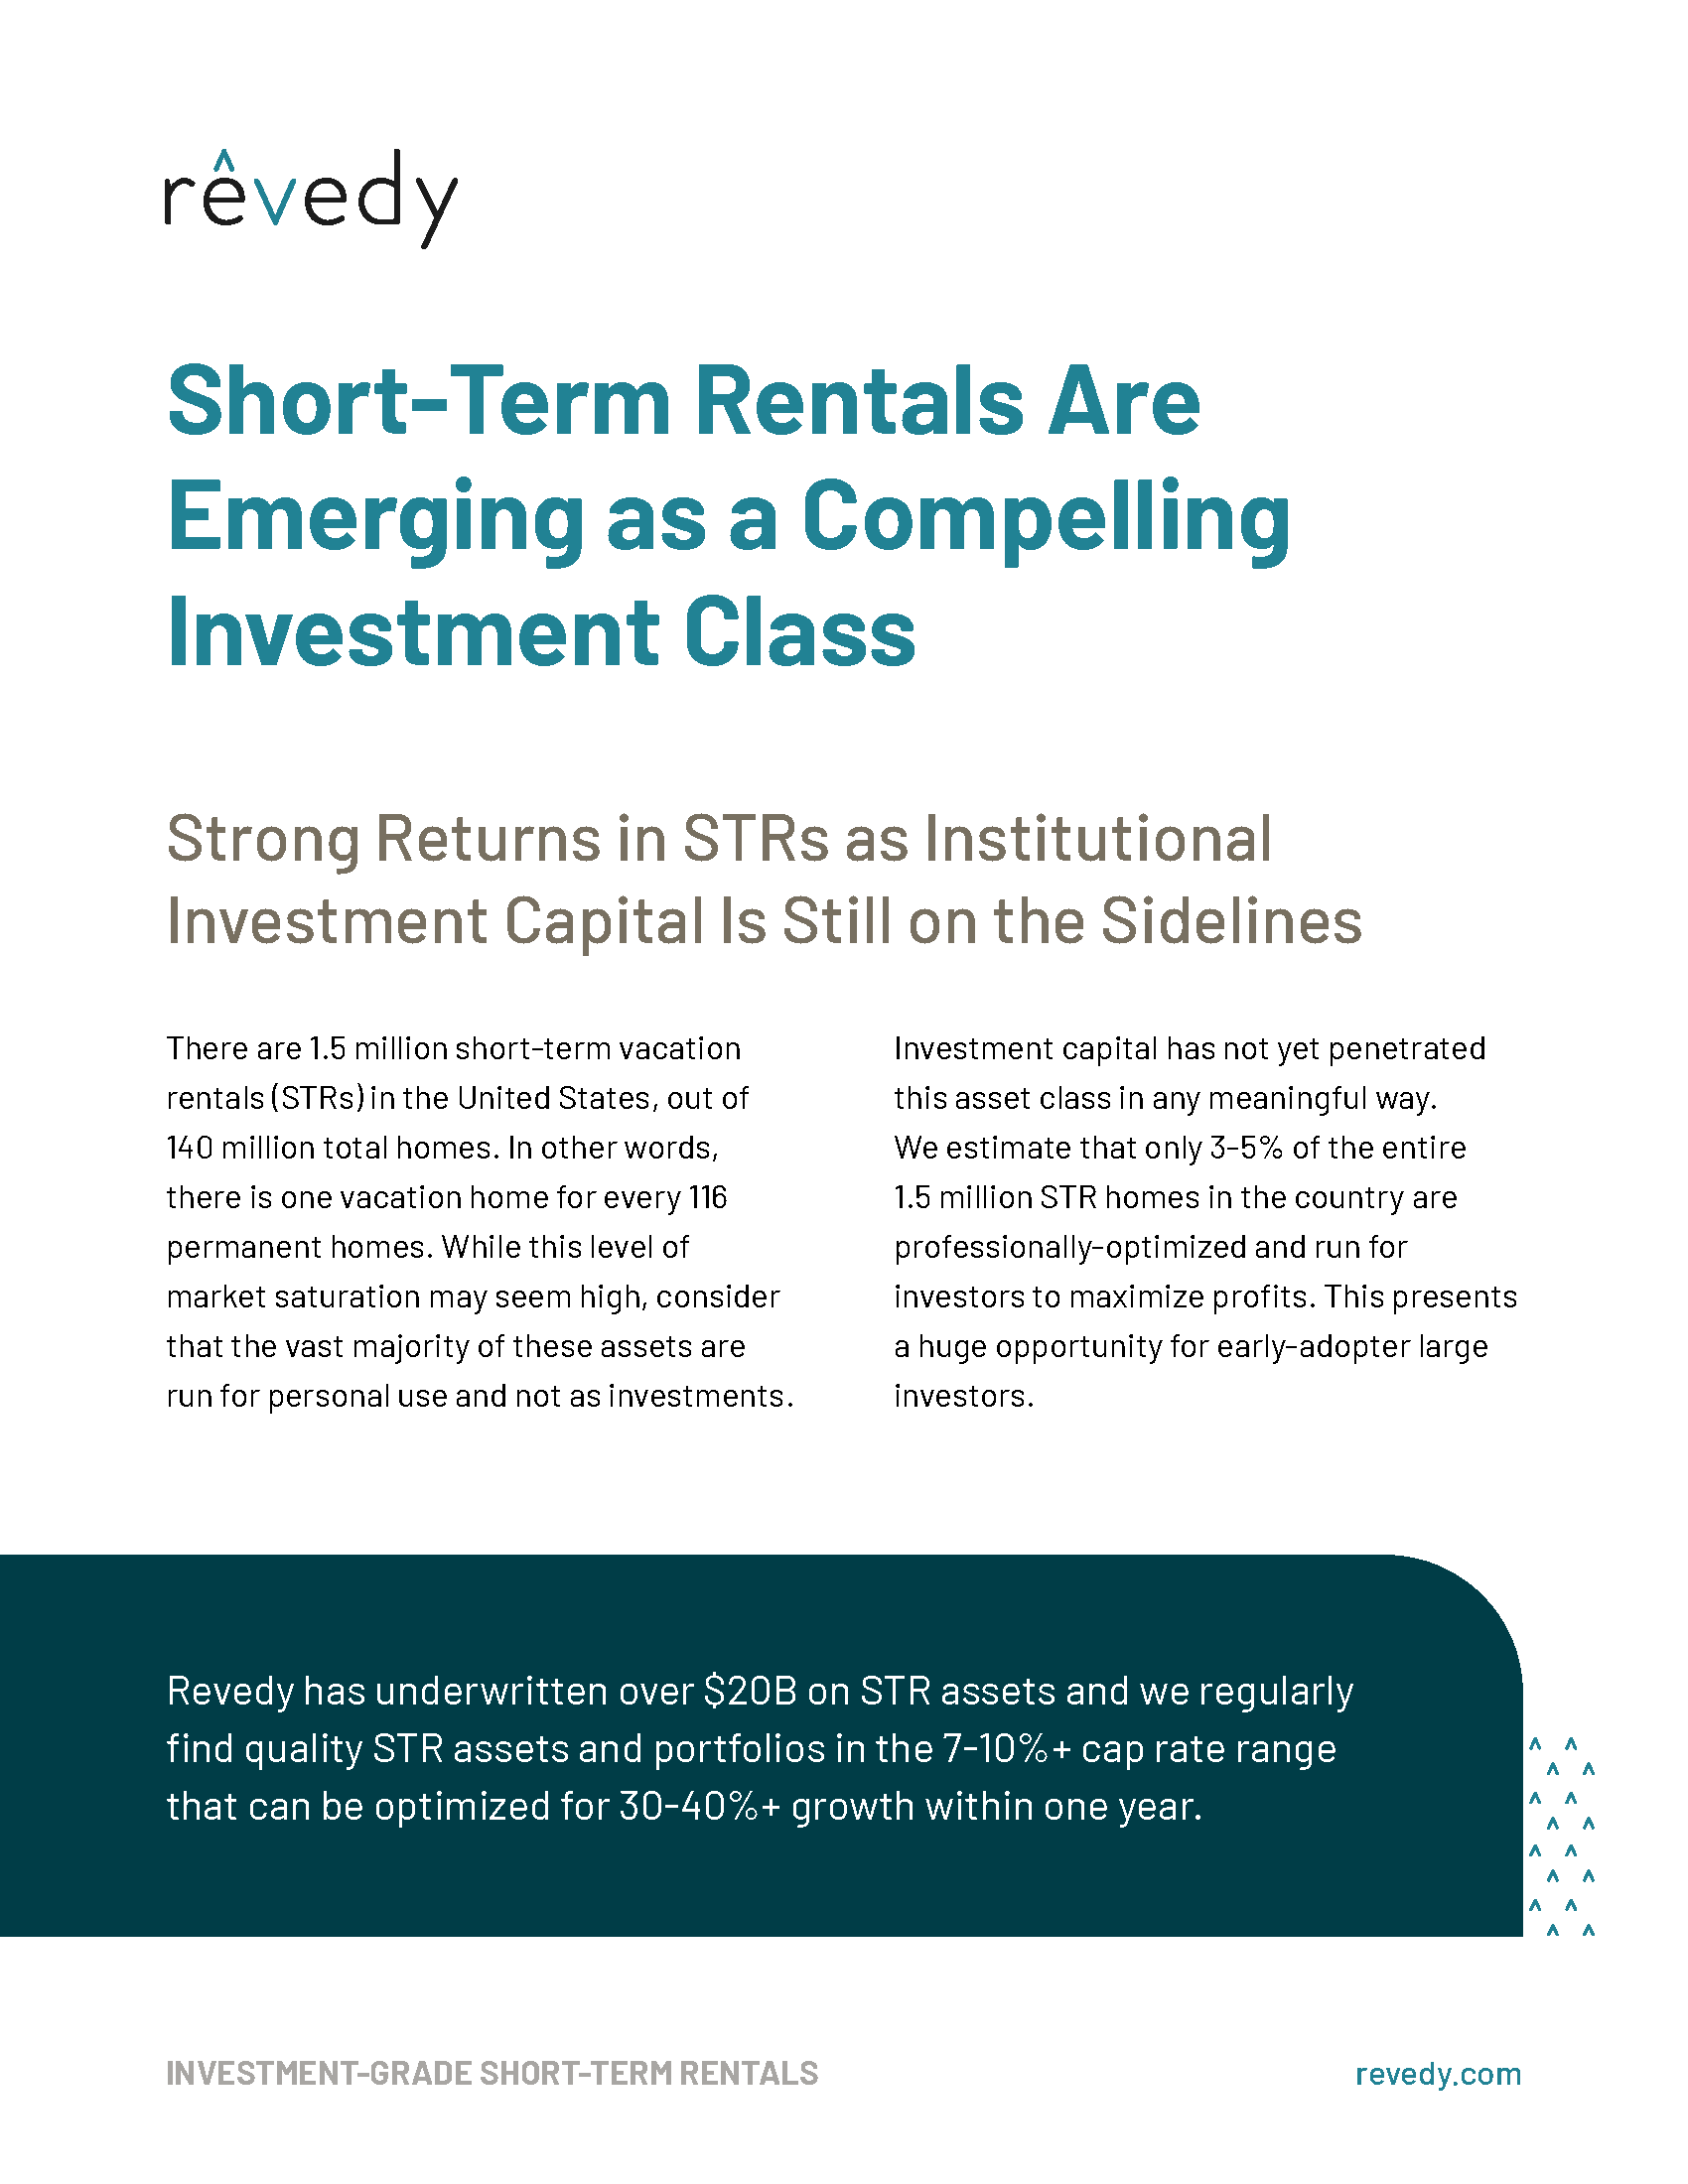 Investing in short-term rentals